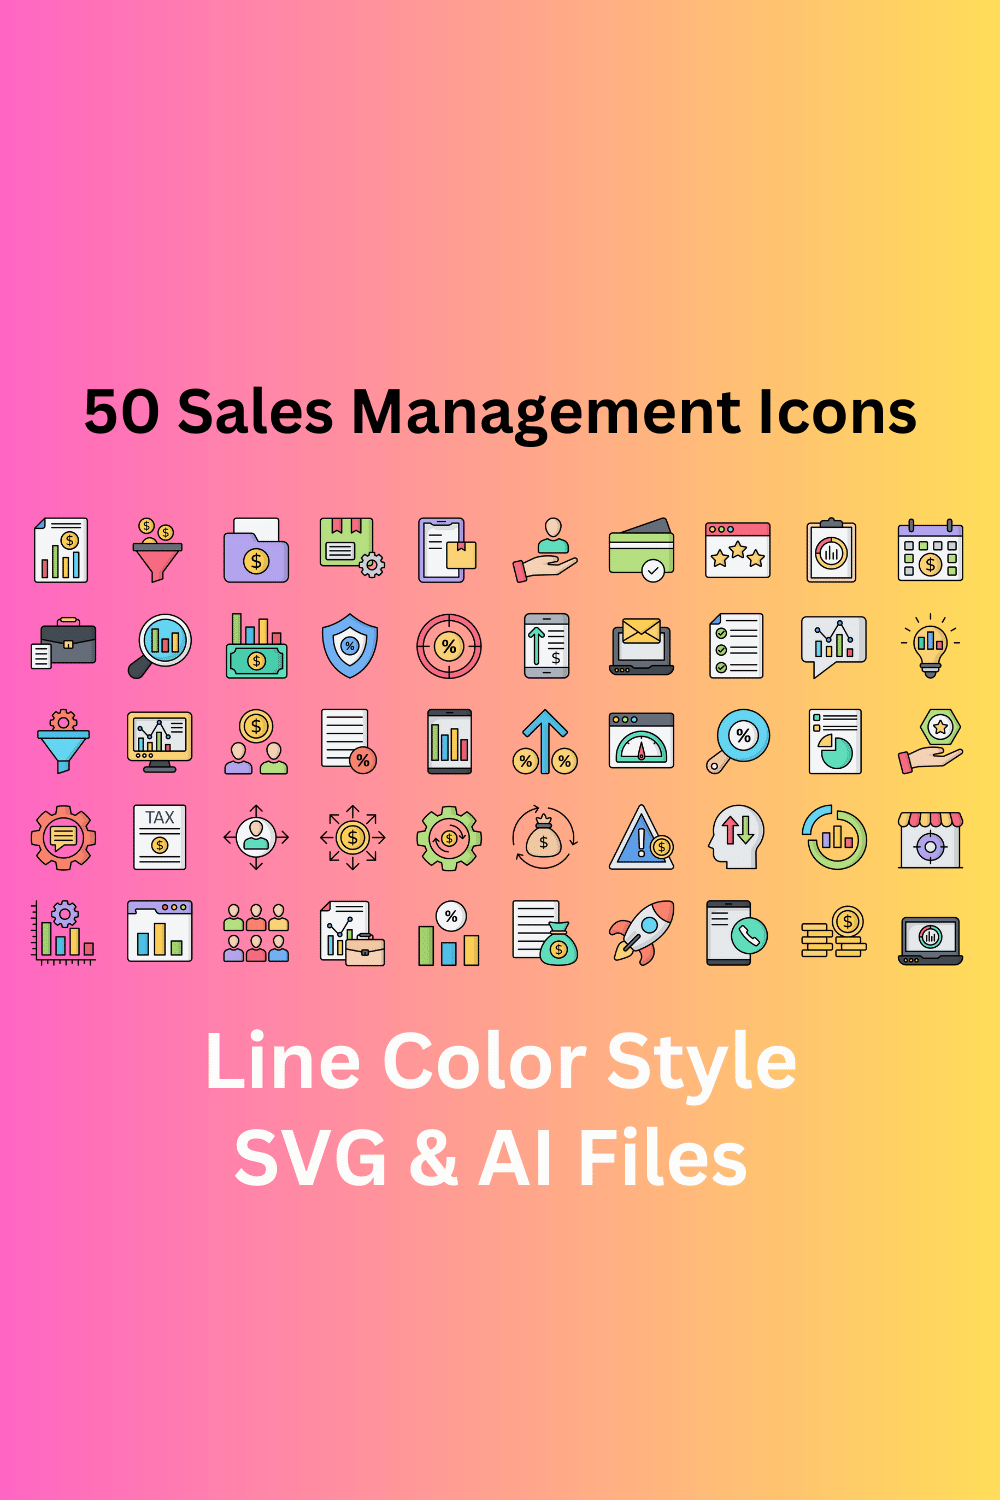 Sales Management Icon Set 50 Line Color Icons - SVG And AI Files pinterest preview image.